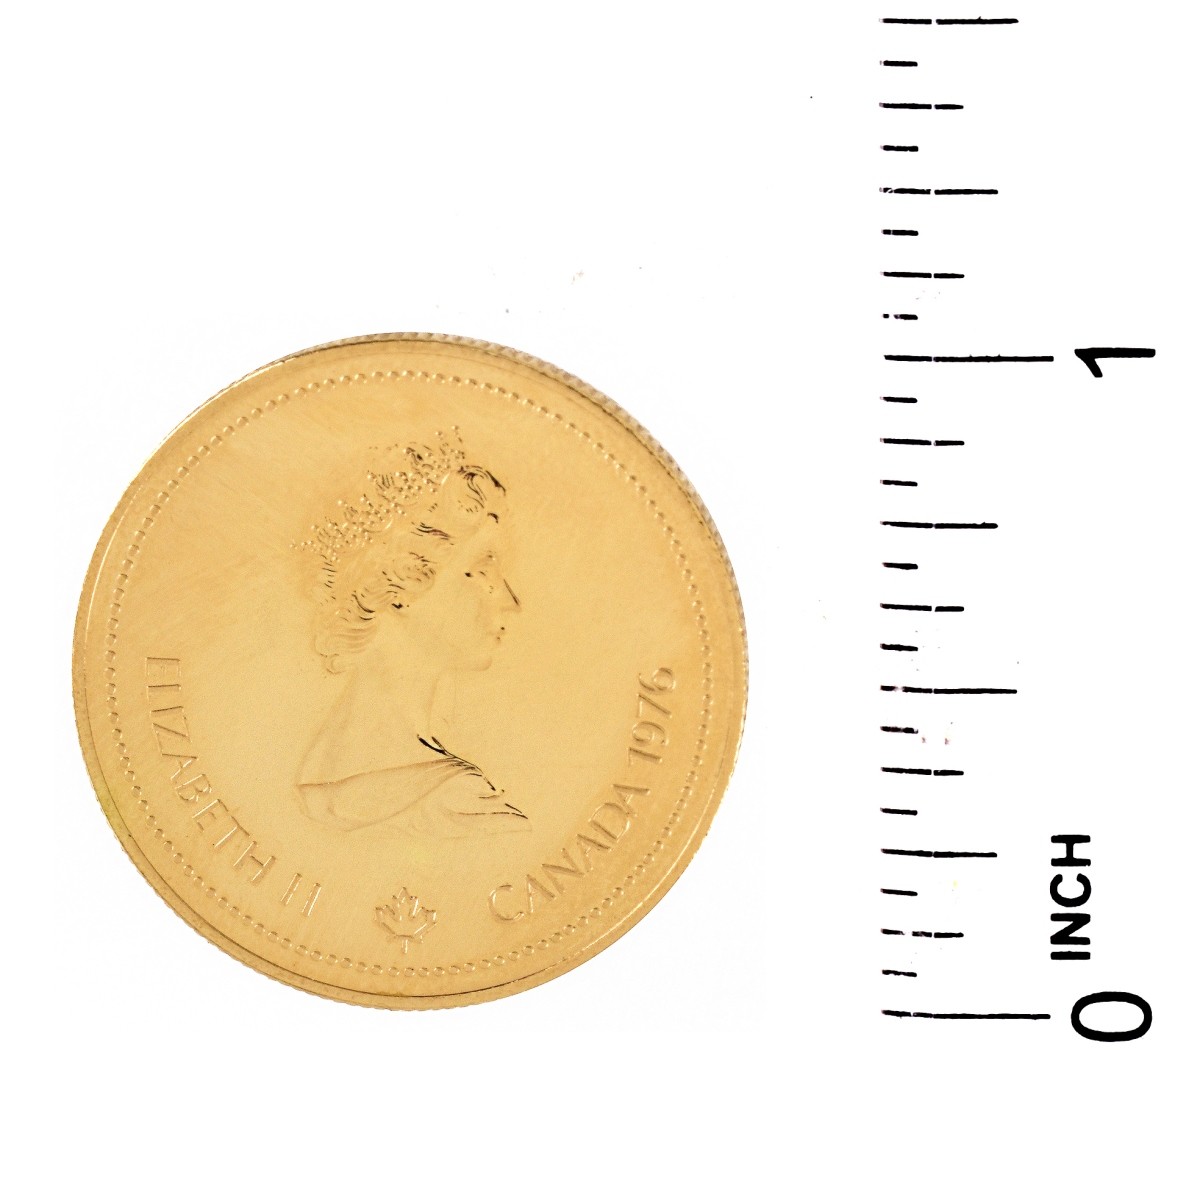 1976 Canadian Elizabeth II $100.00 Gold Coin